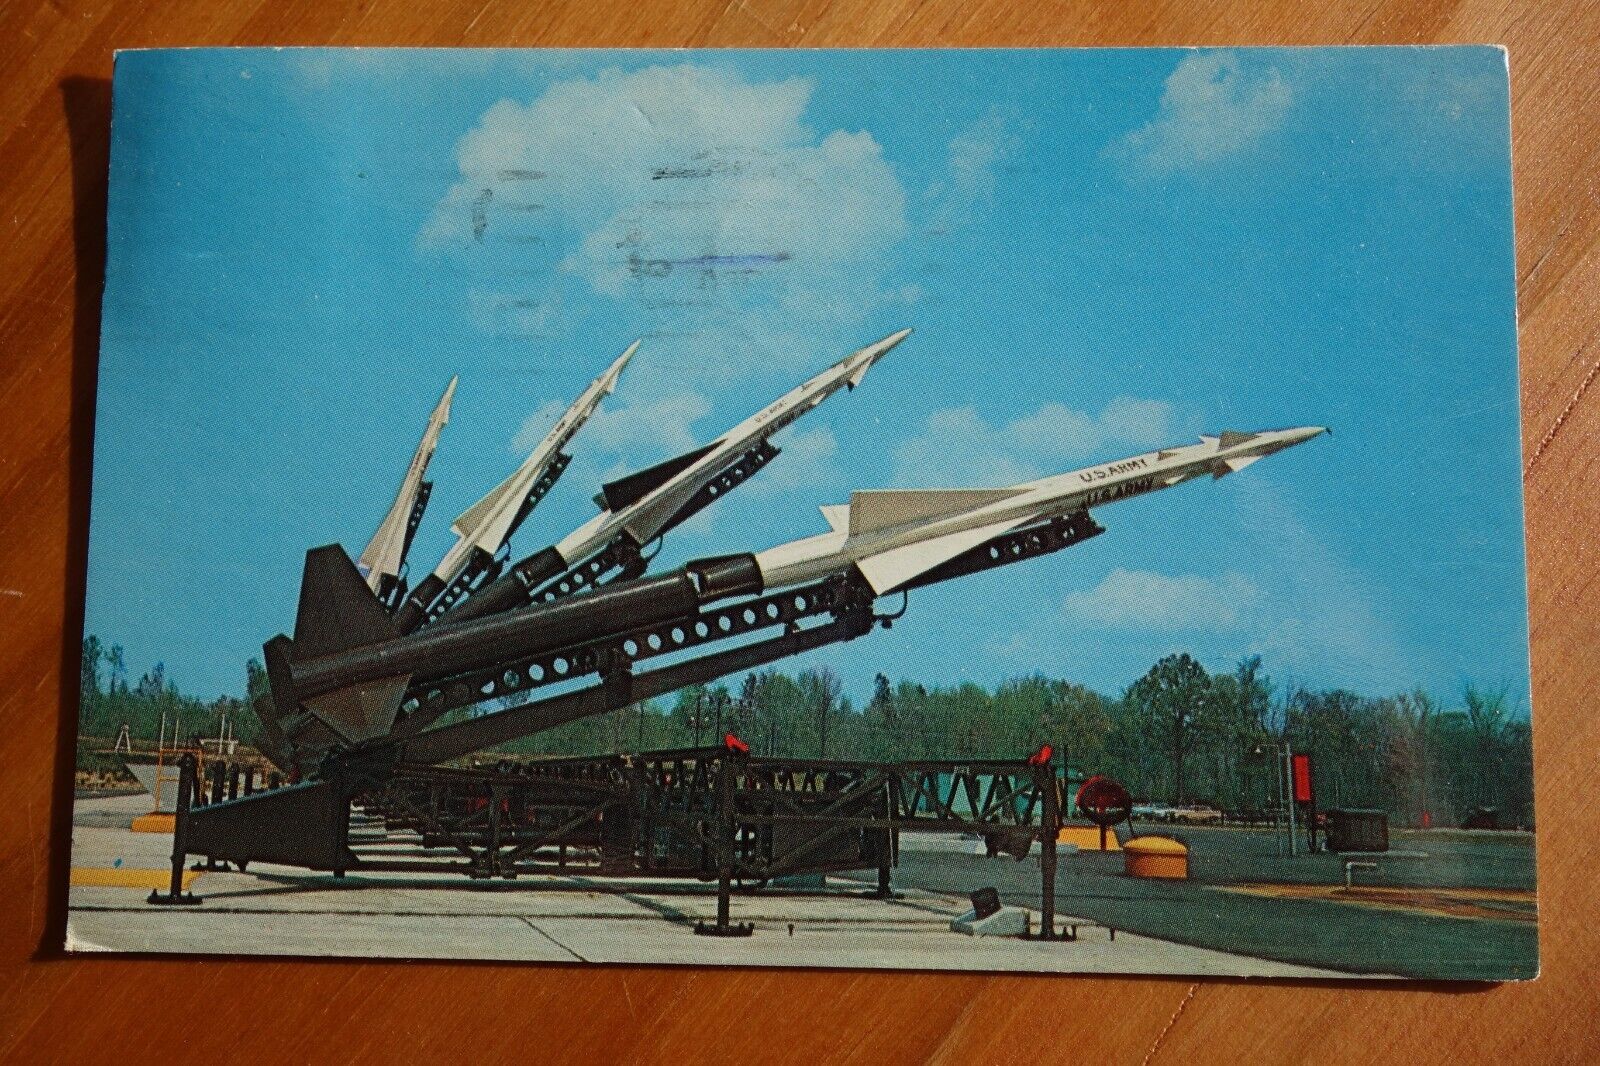 NIKE-AJAX missle site, US Army Third Artillery Group, Hamptons Roads VA postcard